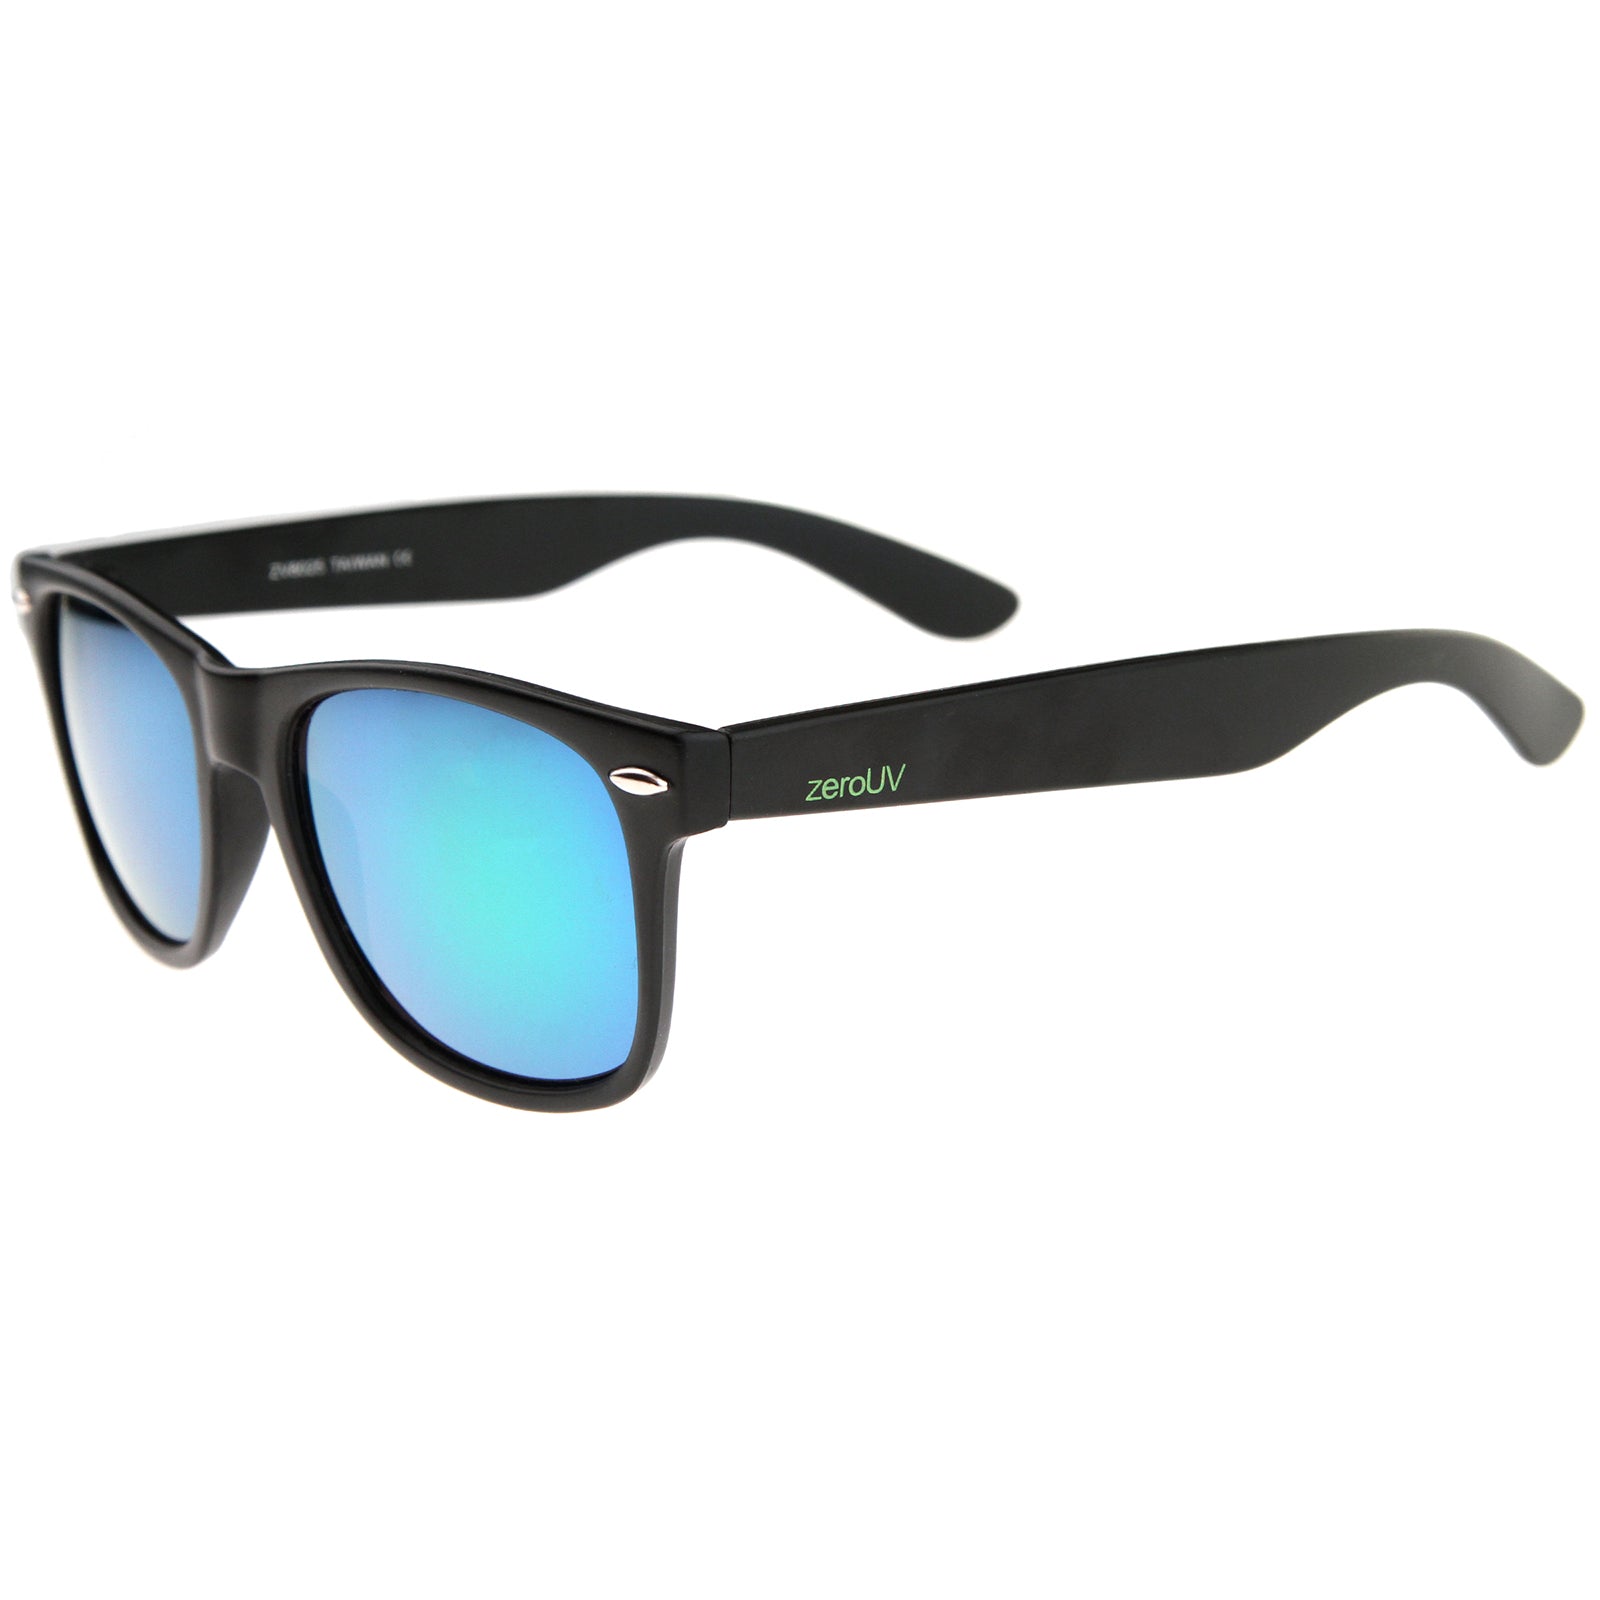 zeroUV - Matte Finish Color Mirror Lens Large Square Horn Rimmed Sunglasses 55mm (Black / Forest)